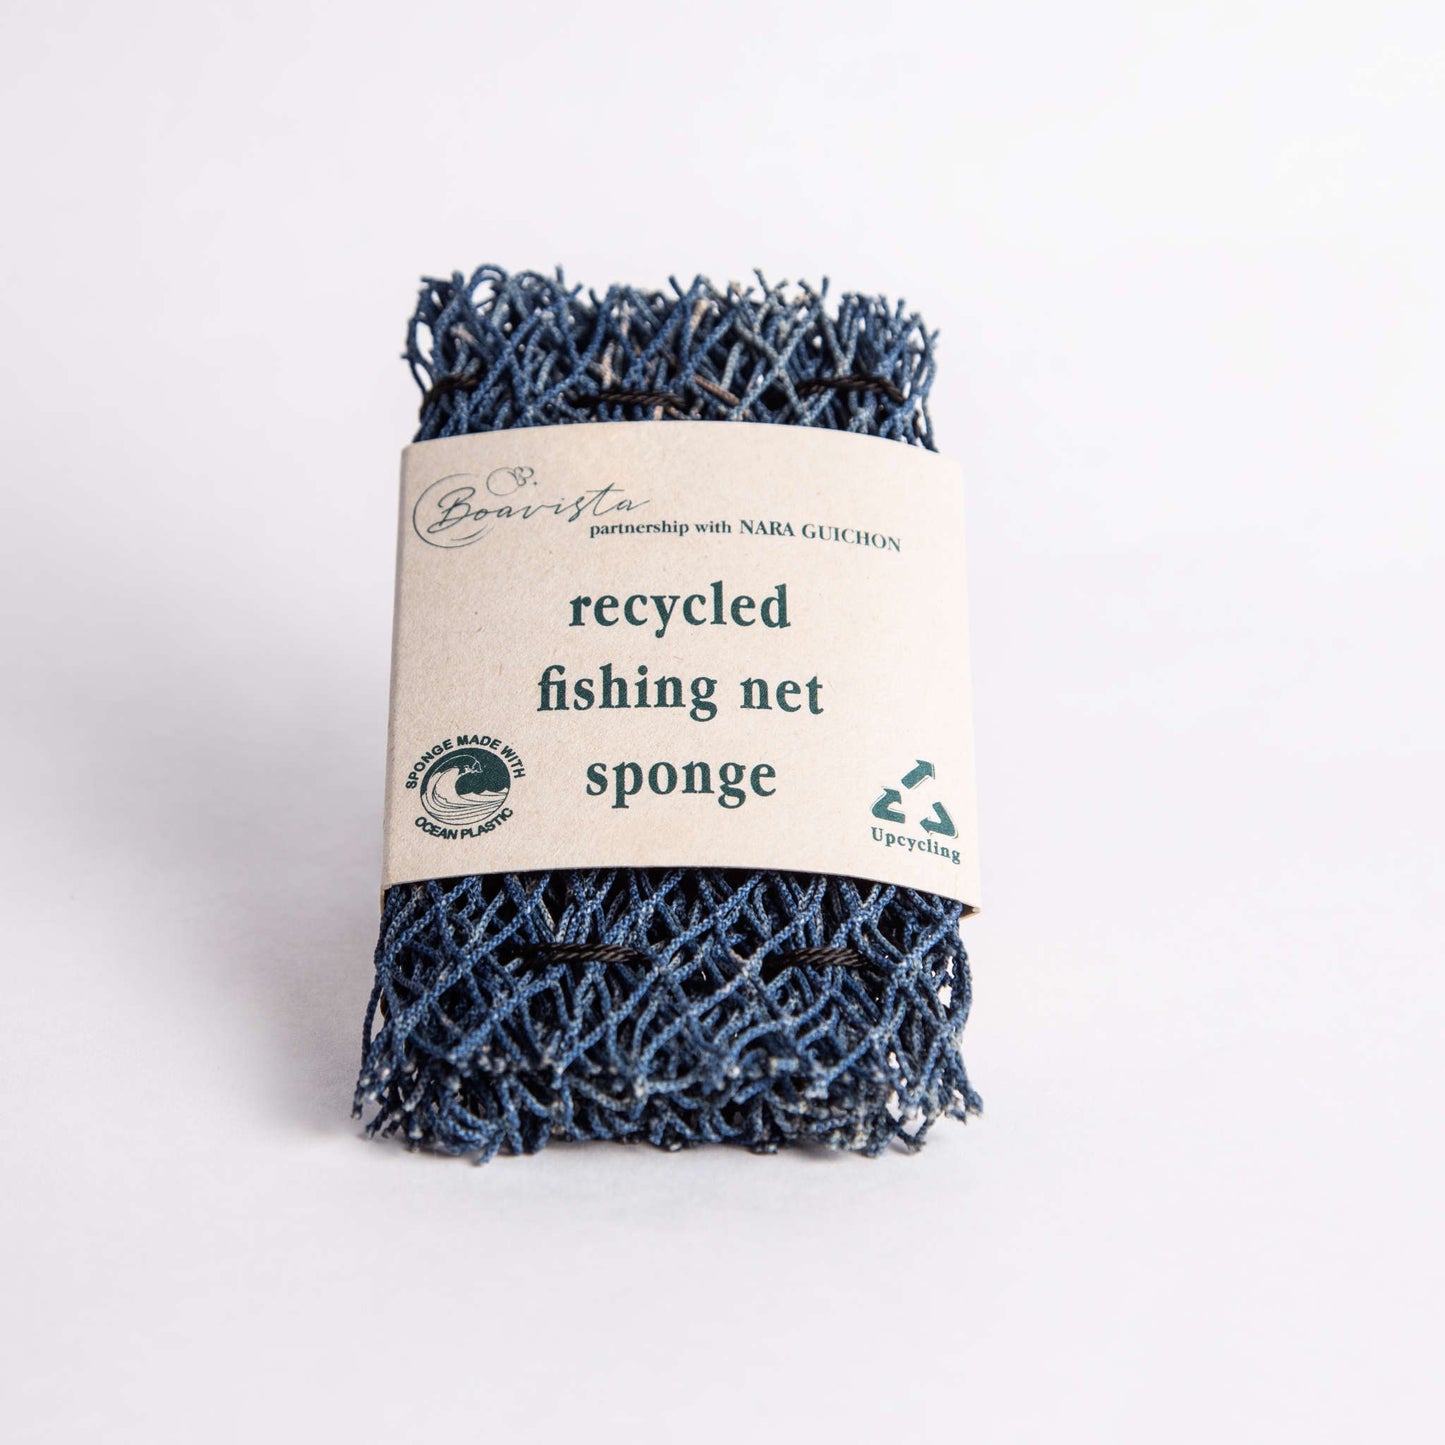 Washing-up sponge made of recycled fishing net